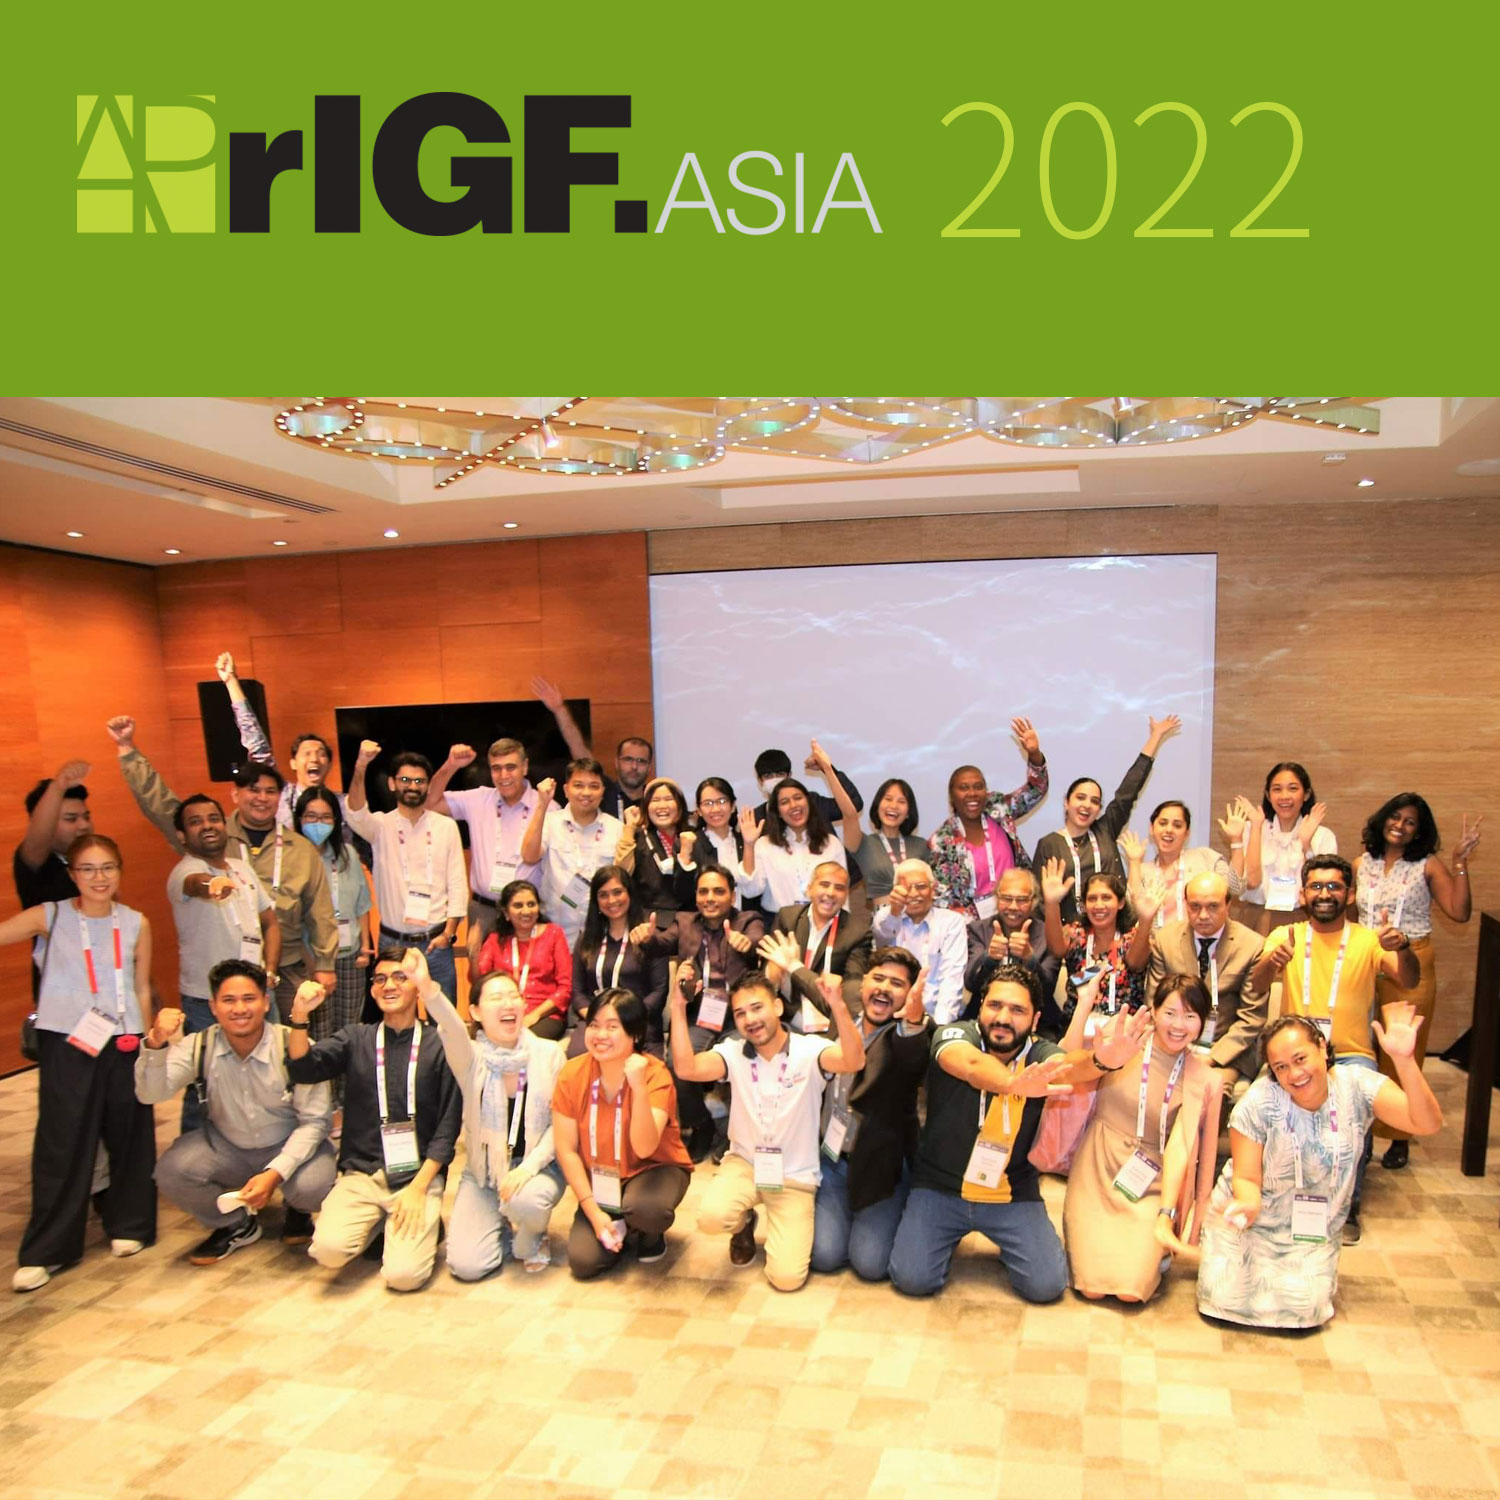 Image: APrIGF.Asia 2022 group photo